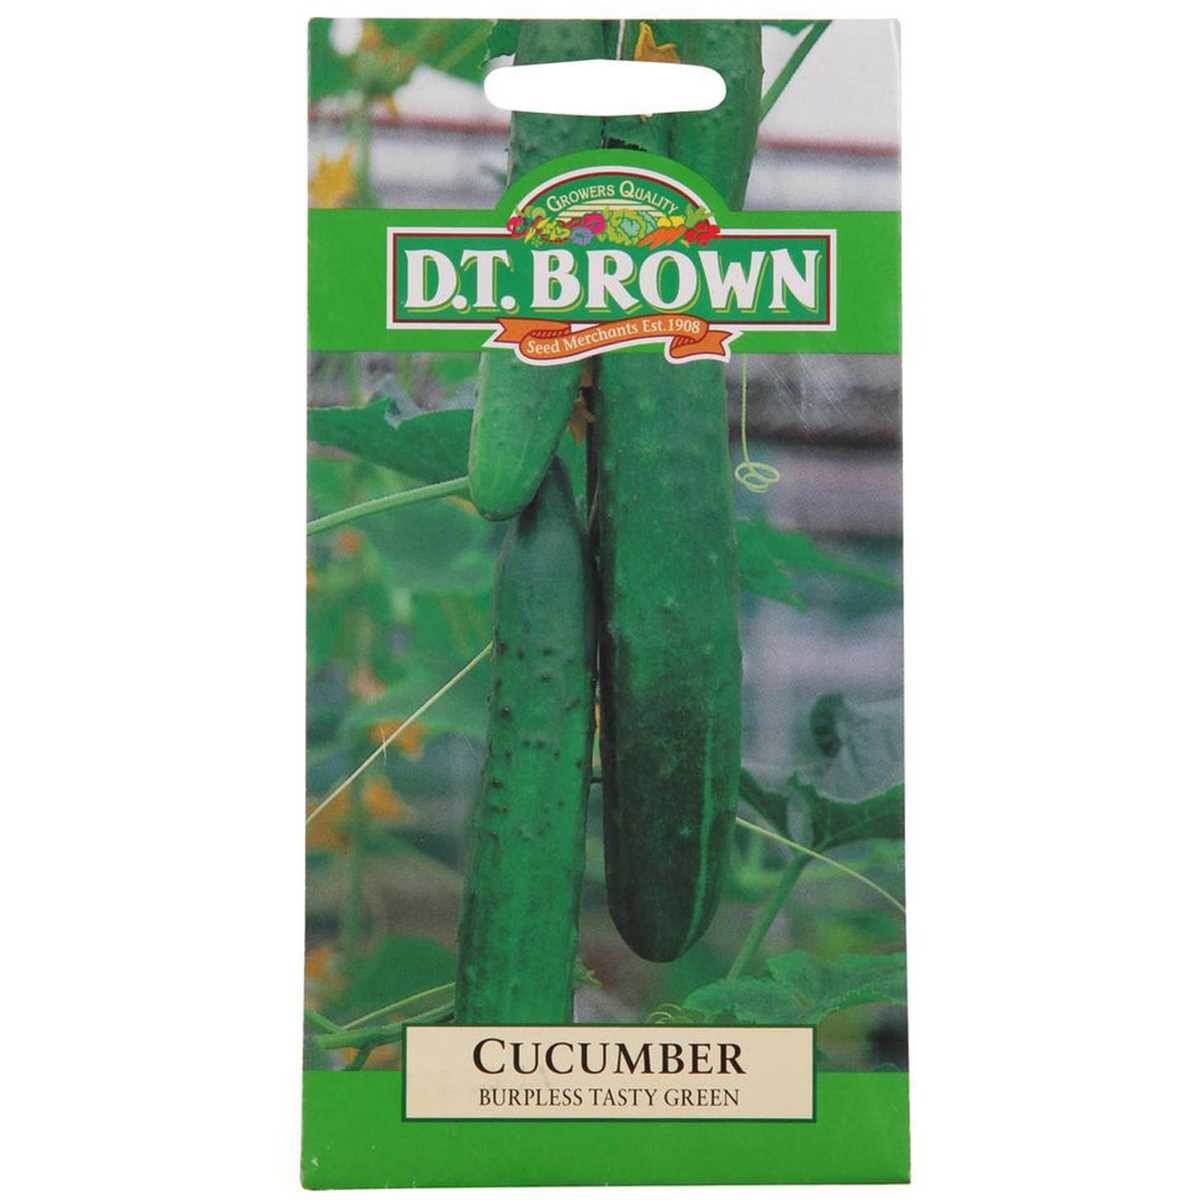 Buy DT Brown Cucumber Burpless Seeds | Dollars and Sense